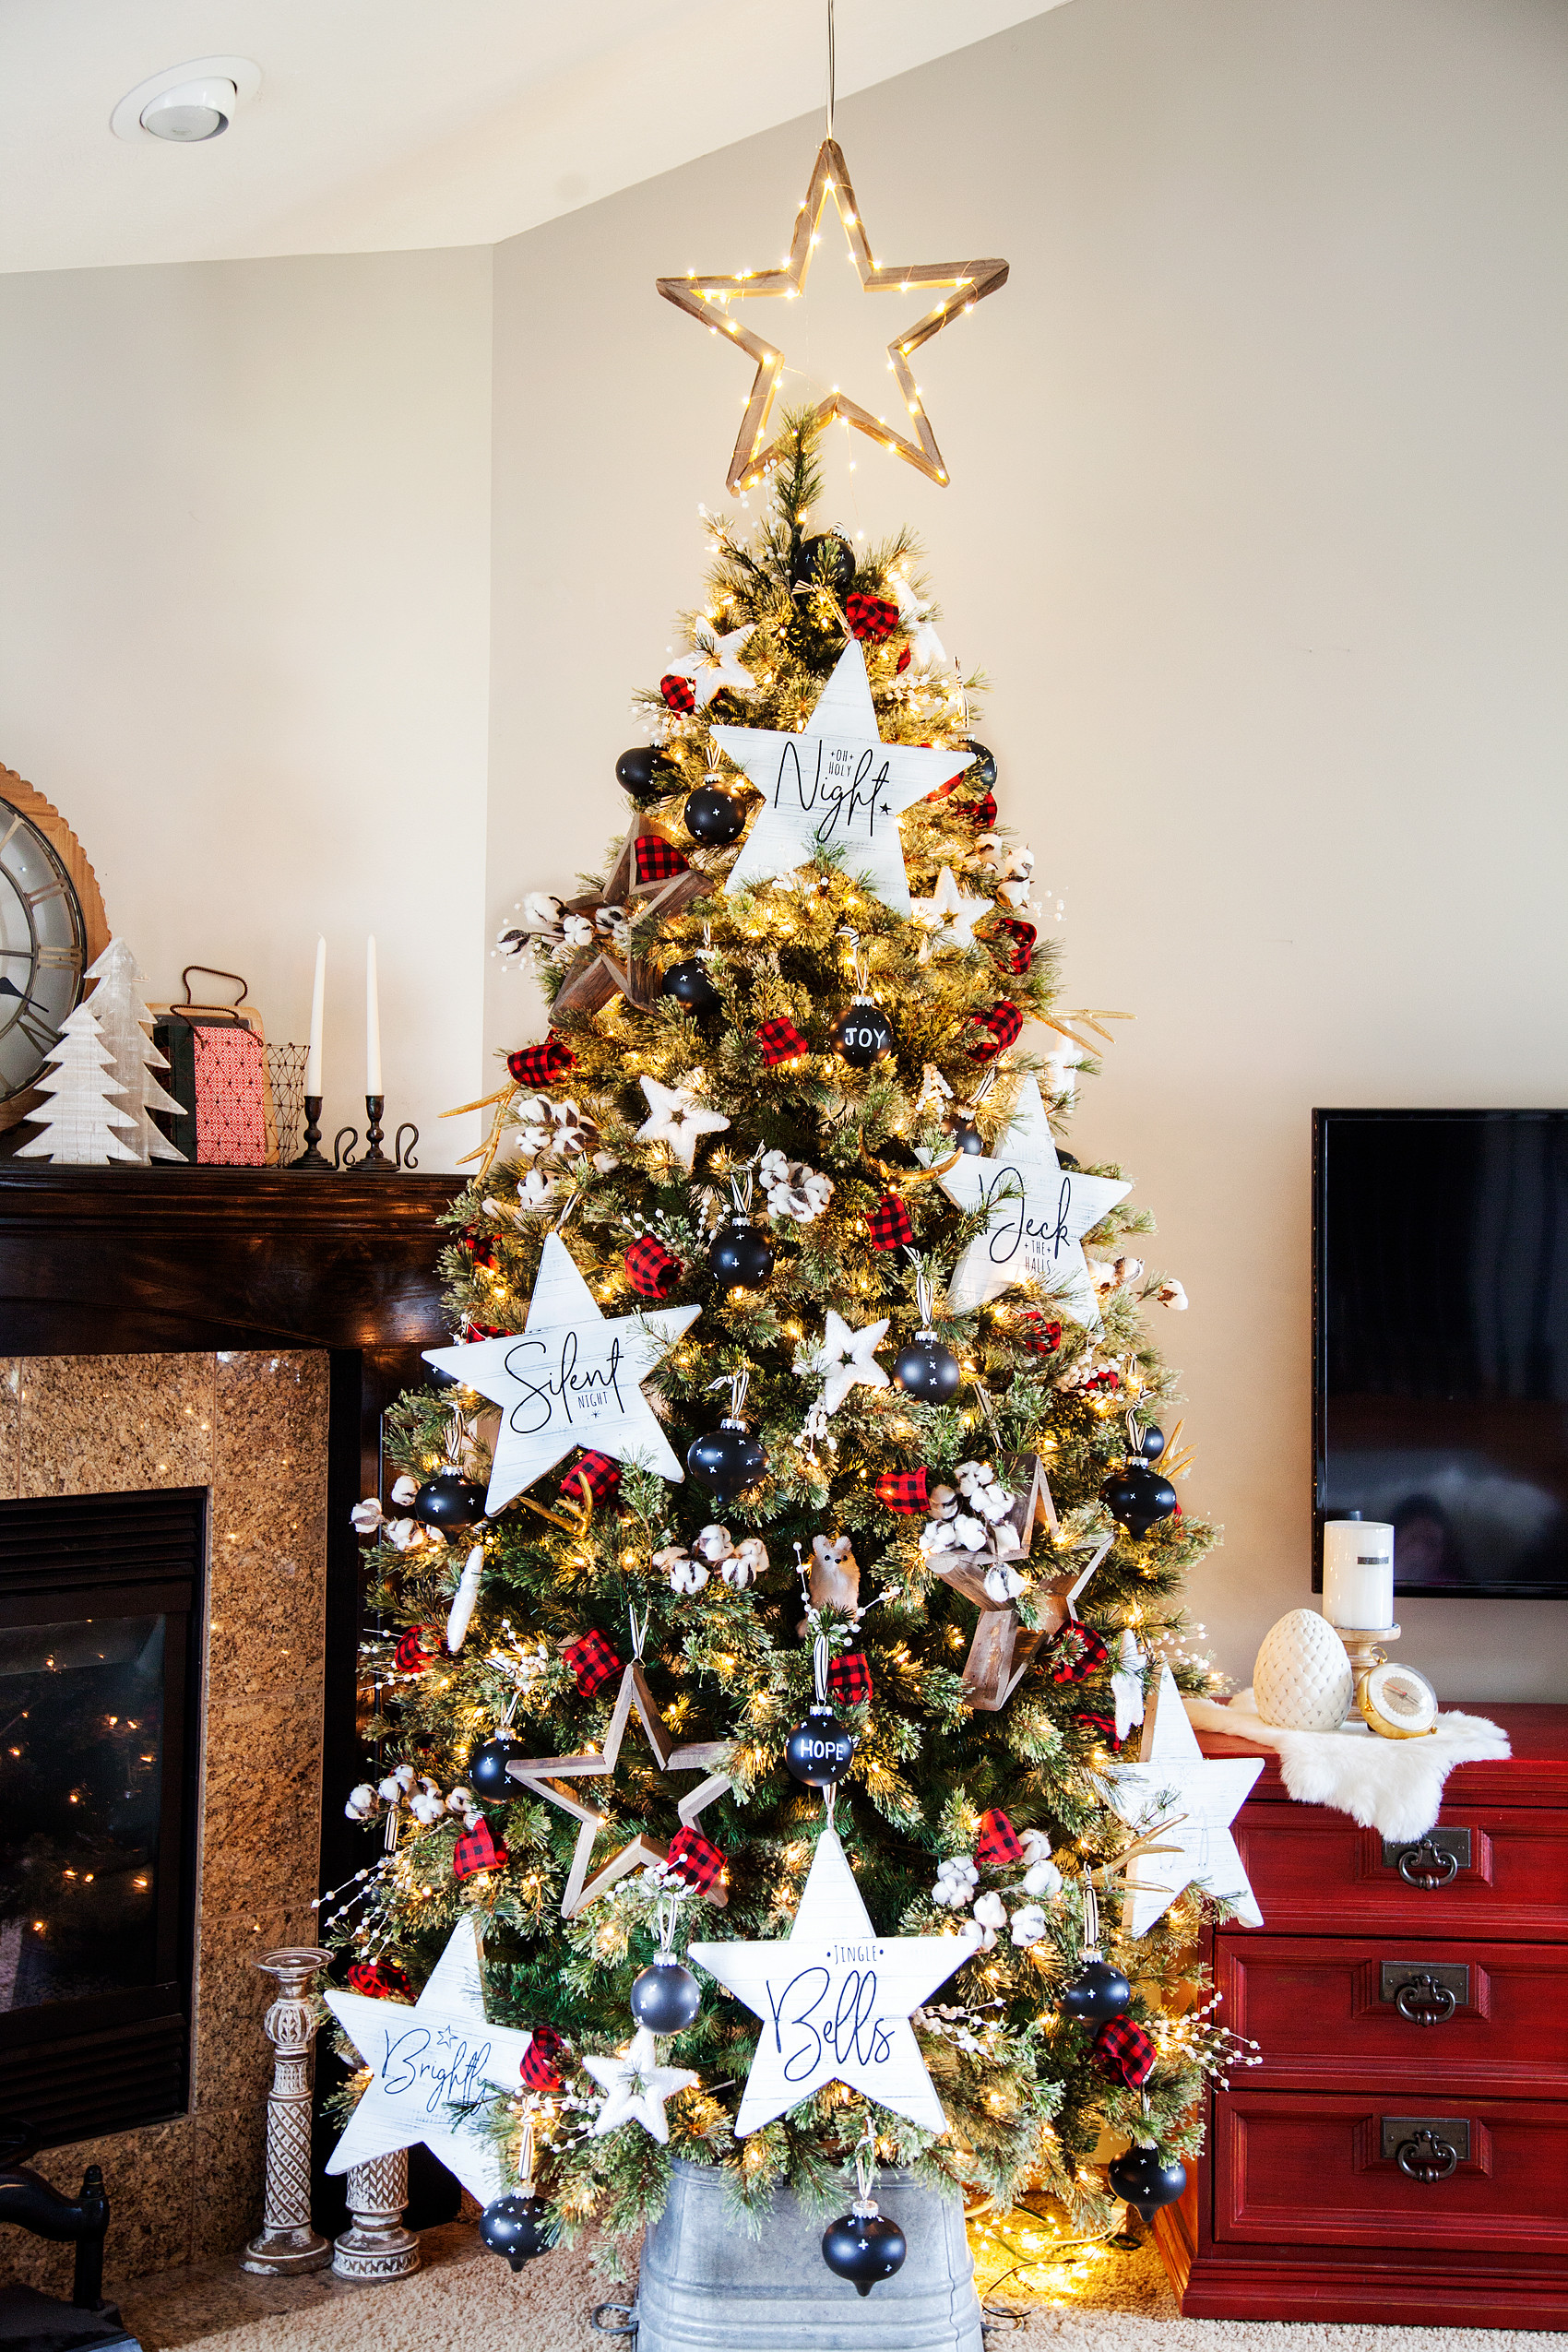 DIY Christmas Tree Star
 DIY Farmhouse Christmas Carol Star Tree Ornaments